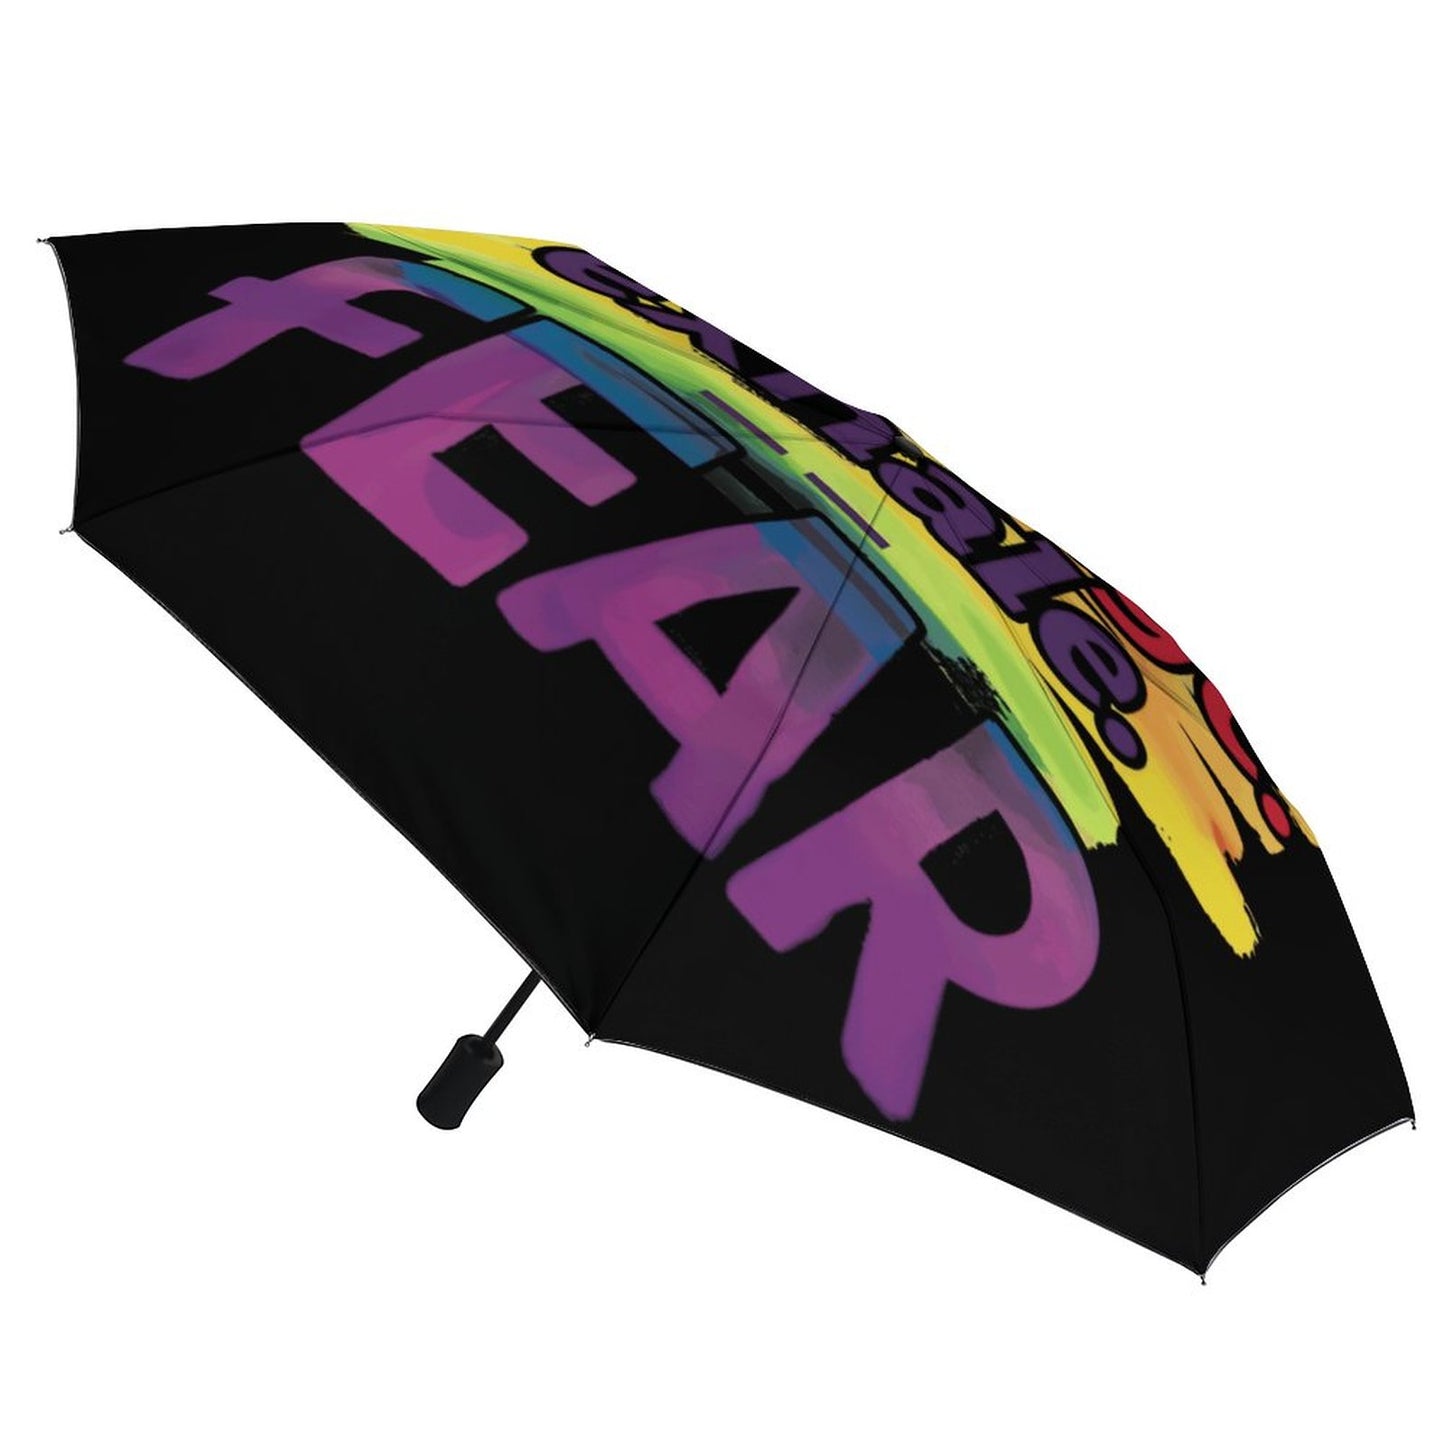 Inhale Courage Exhale Fear Christian Umbrella